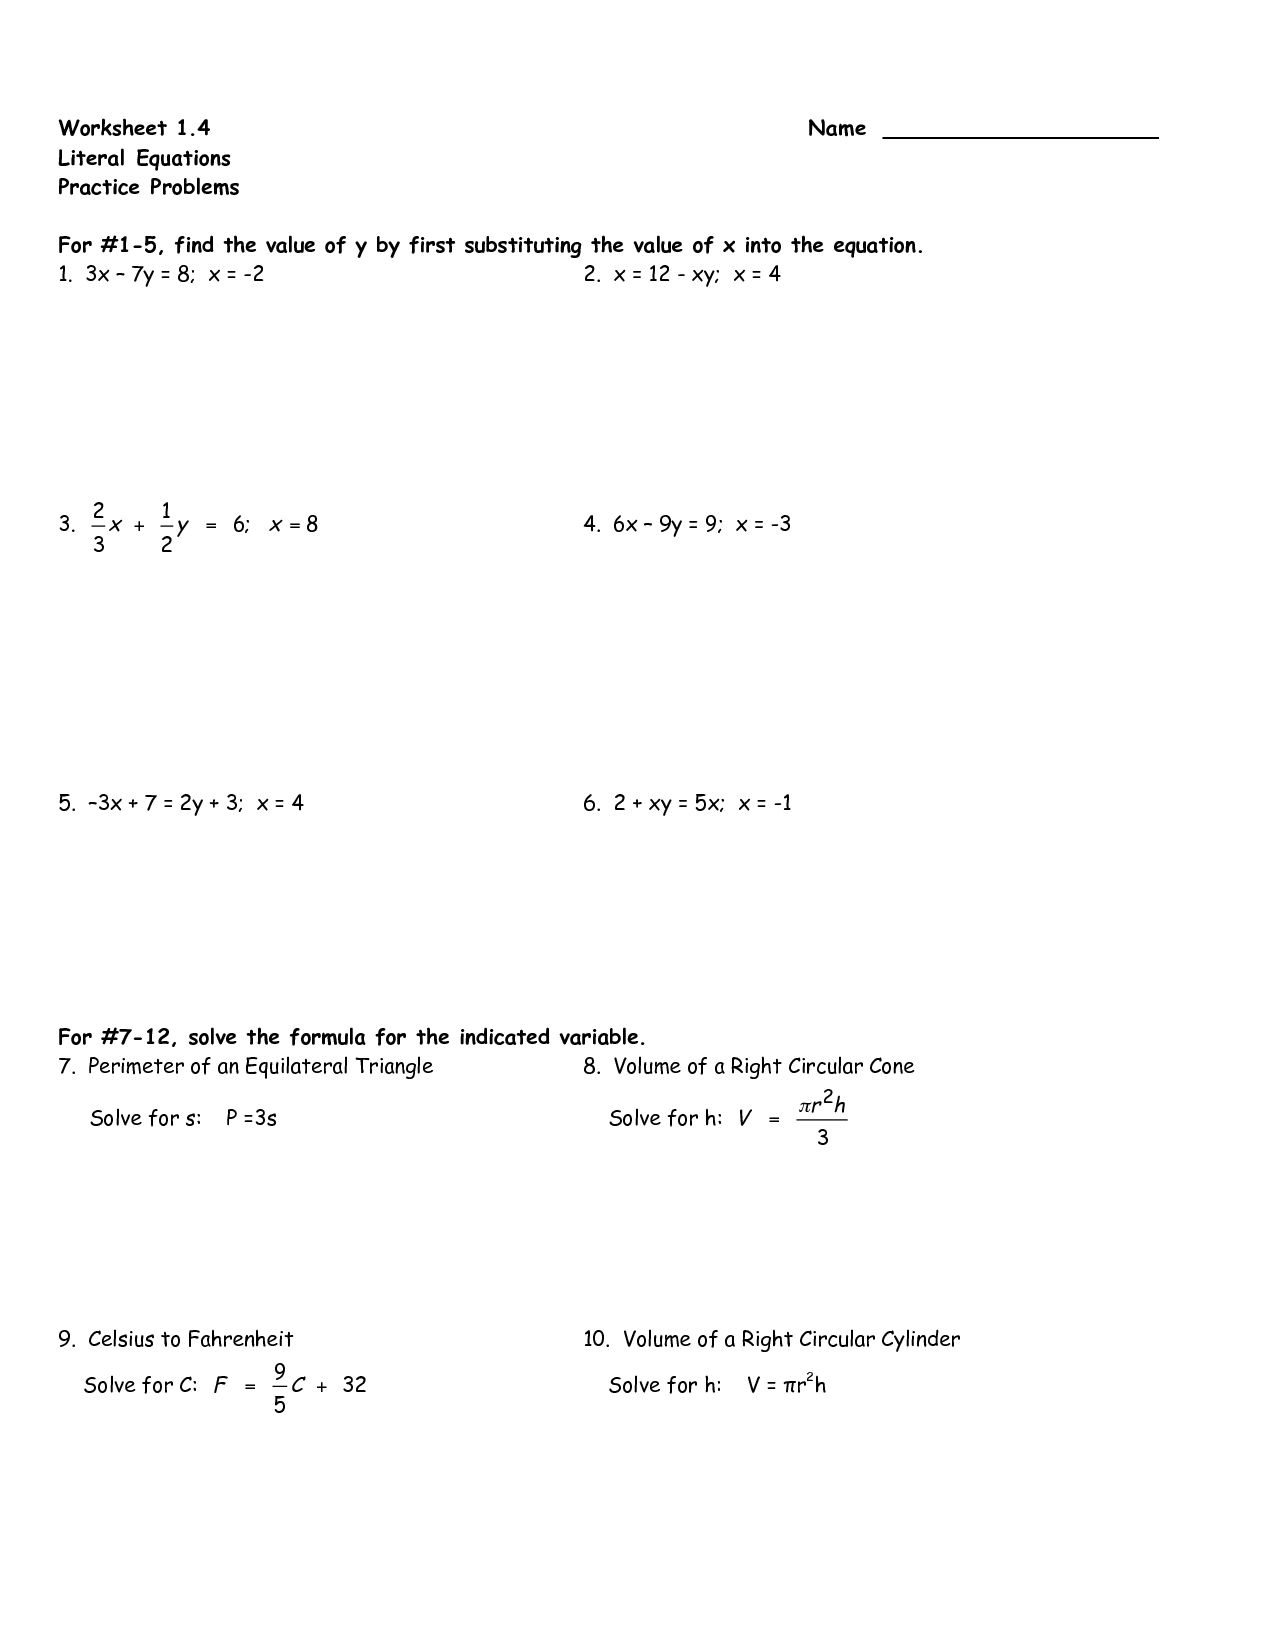 Literal Equations Practice Worksheet Image